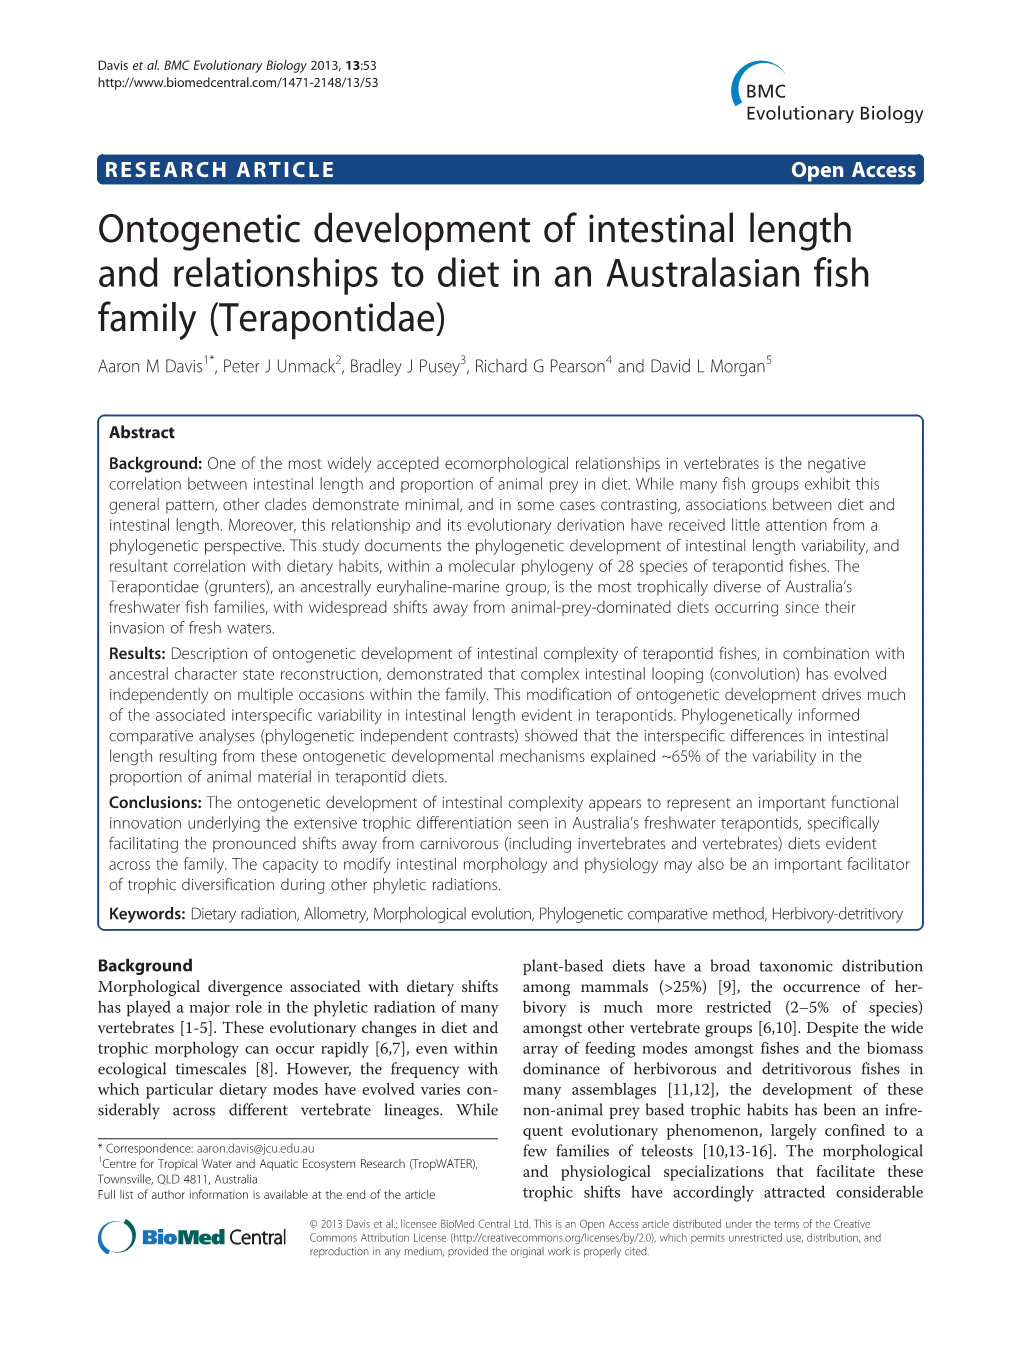 Ontogenetic Development of Intestinal Length